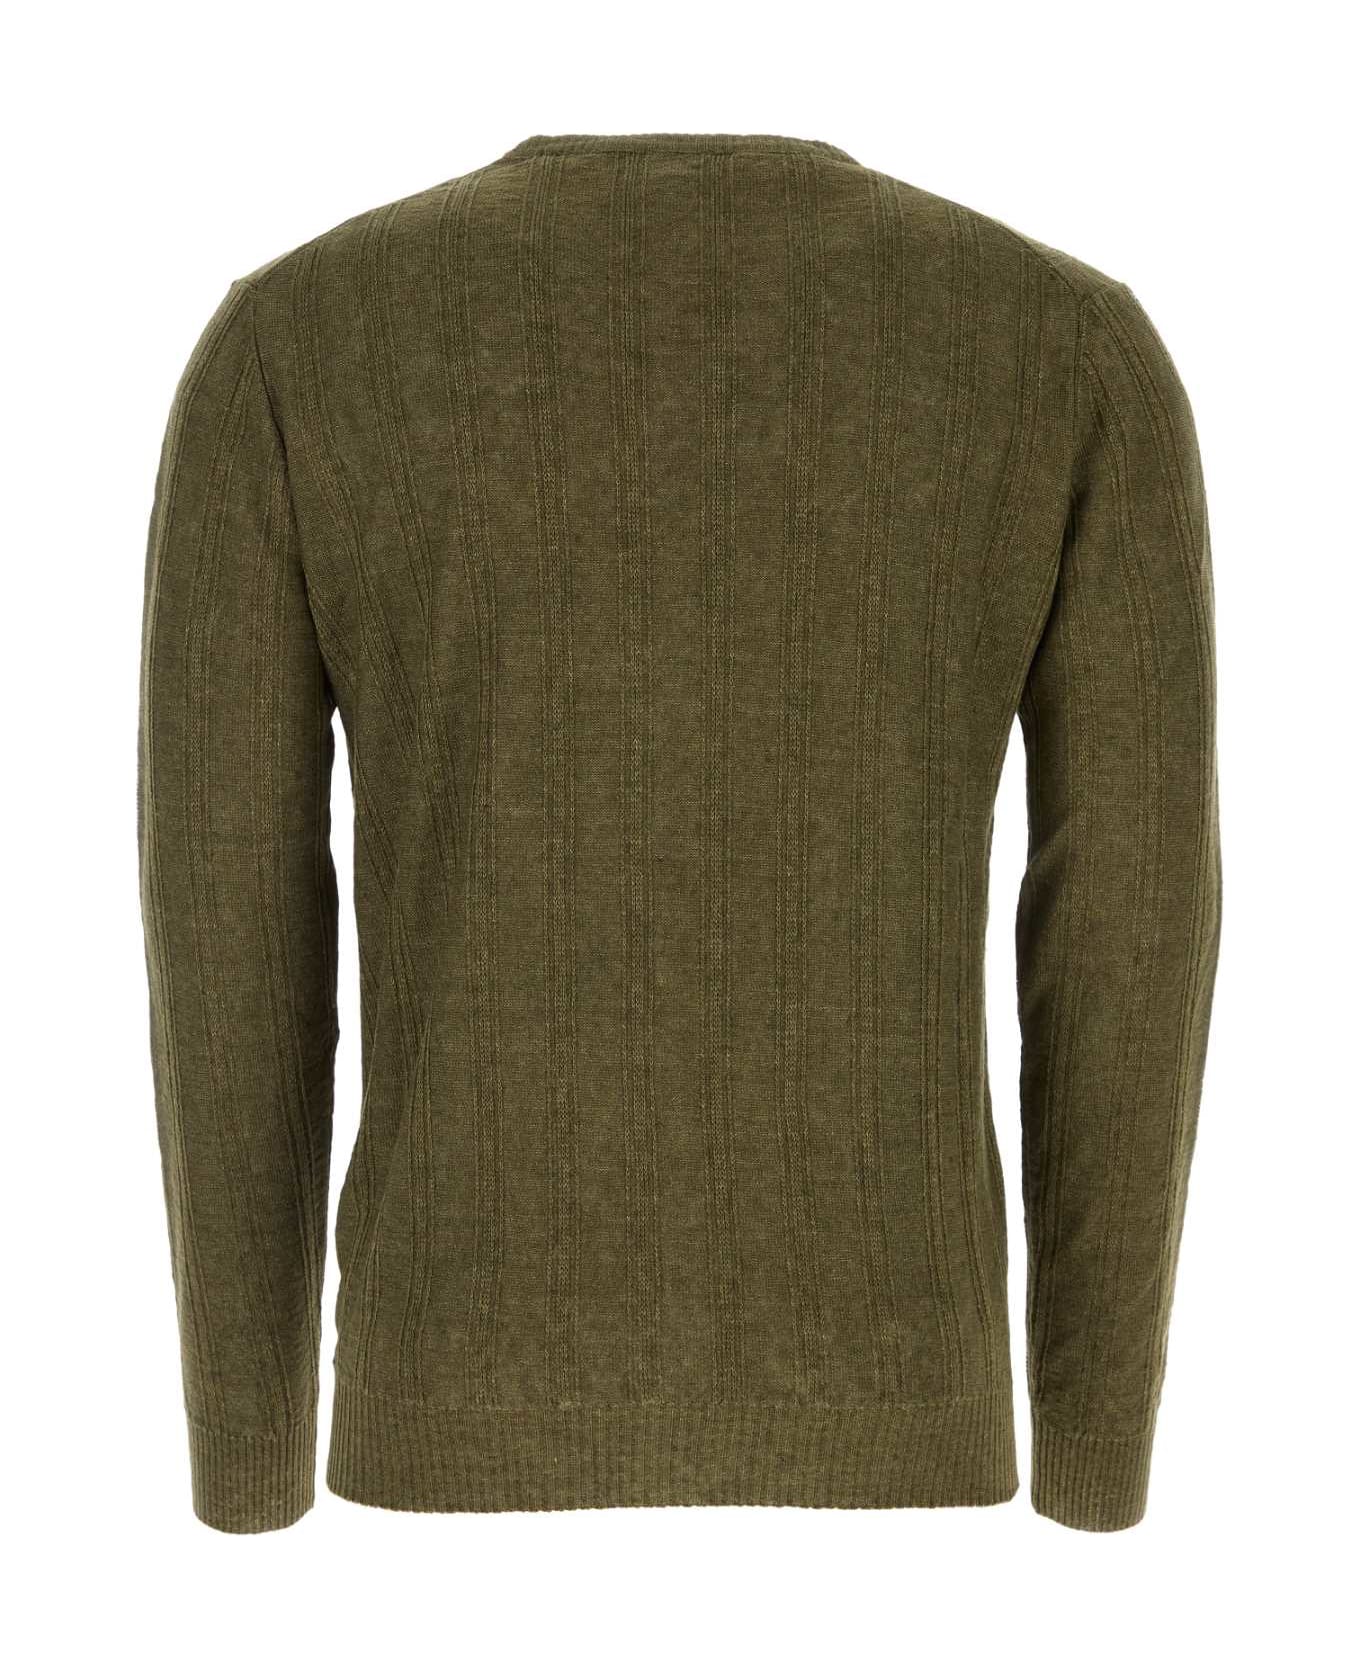 Aspesi Military Green Linen Sweater - 01260